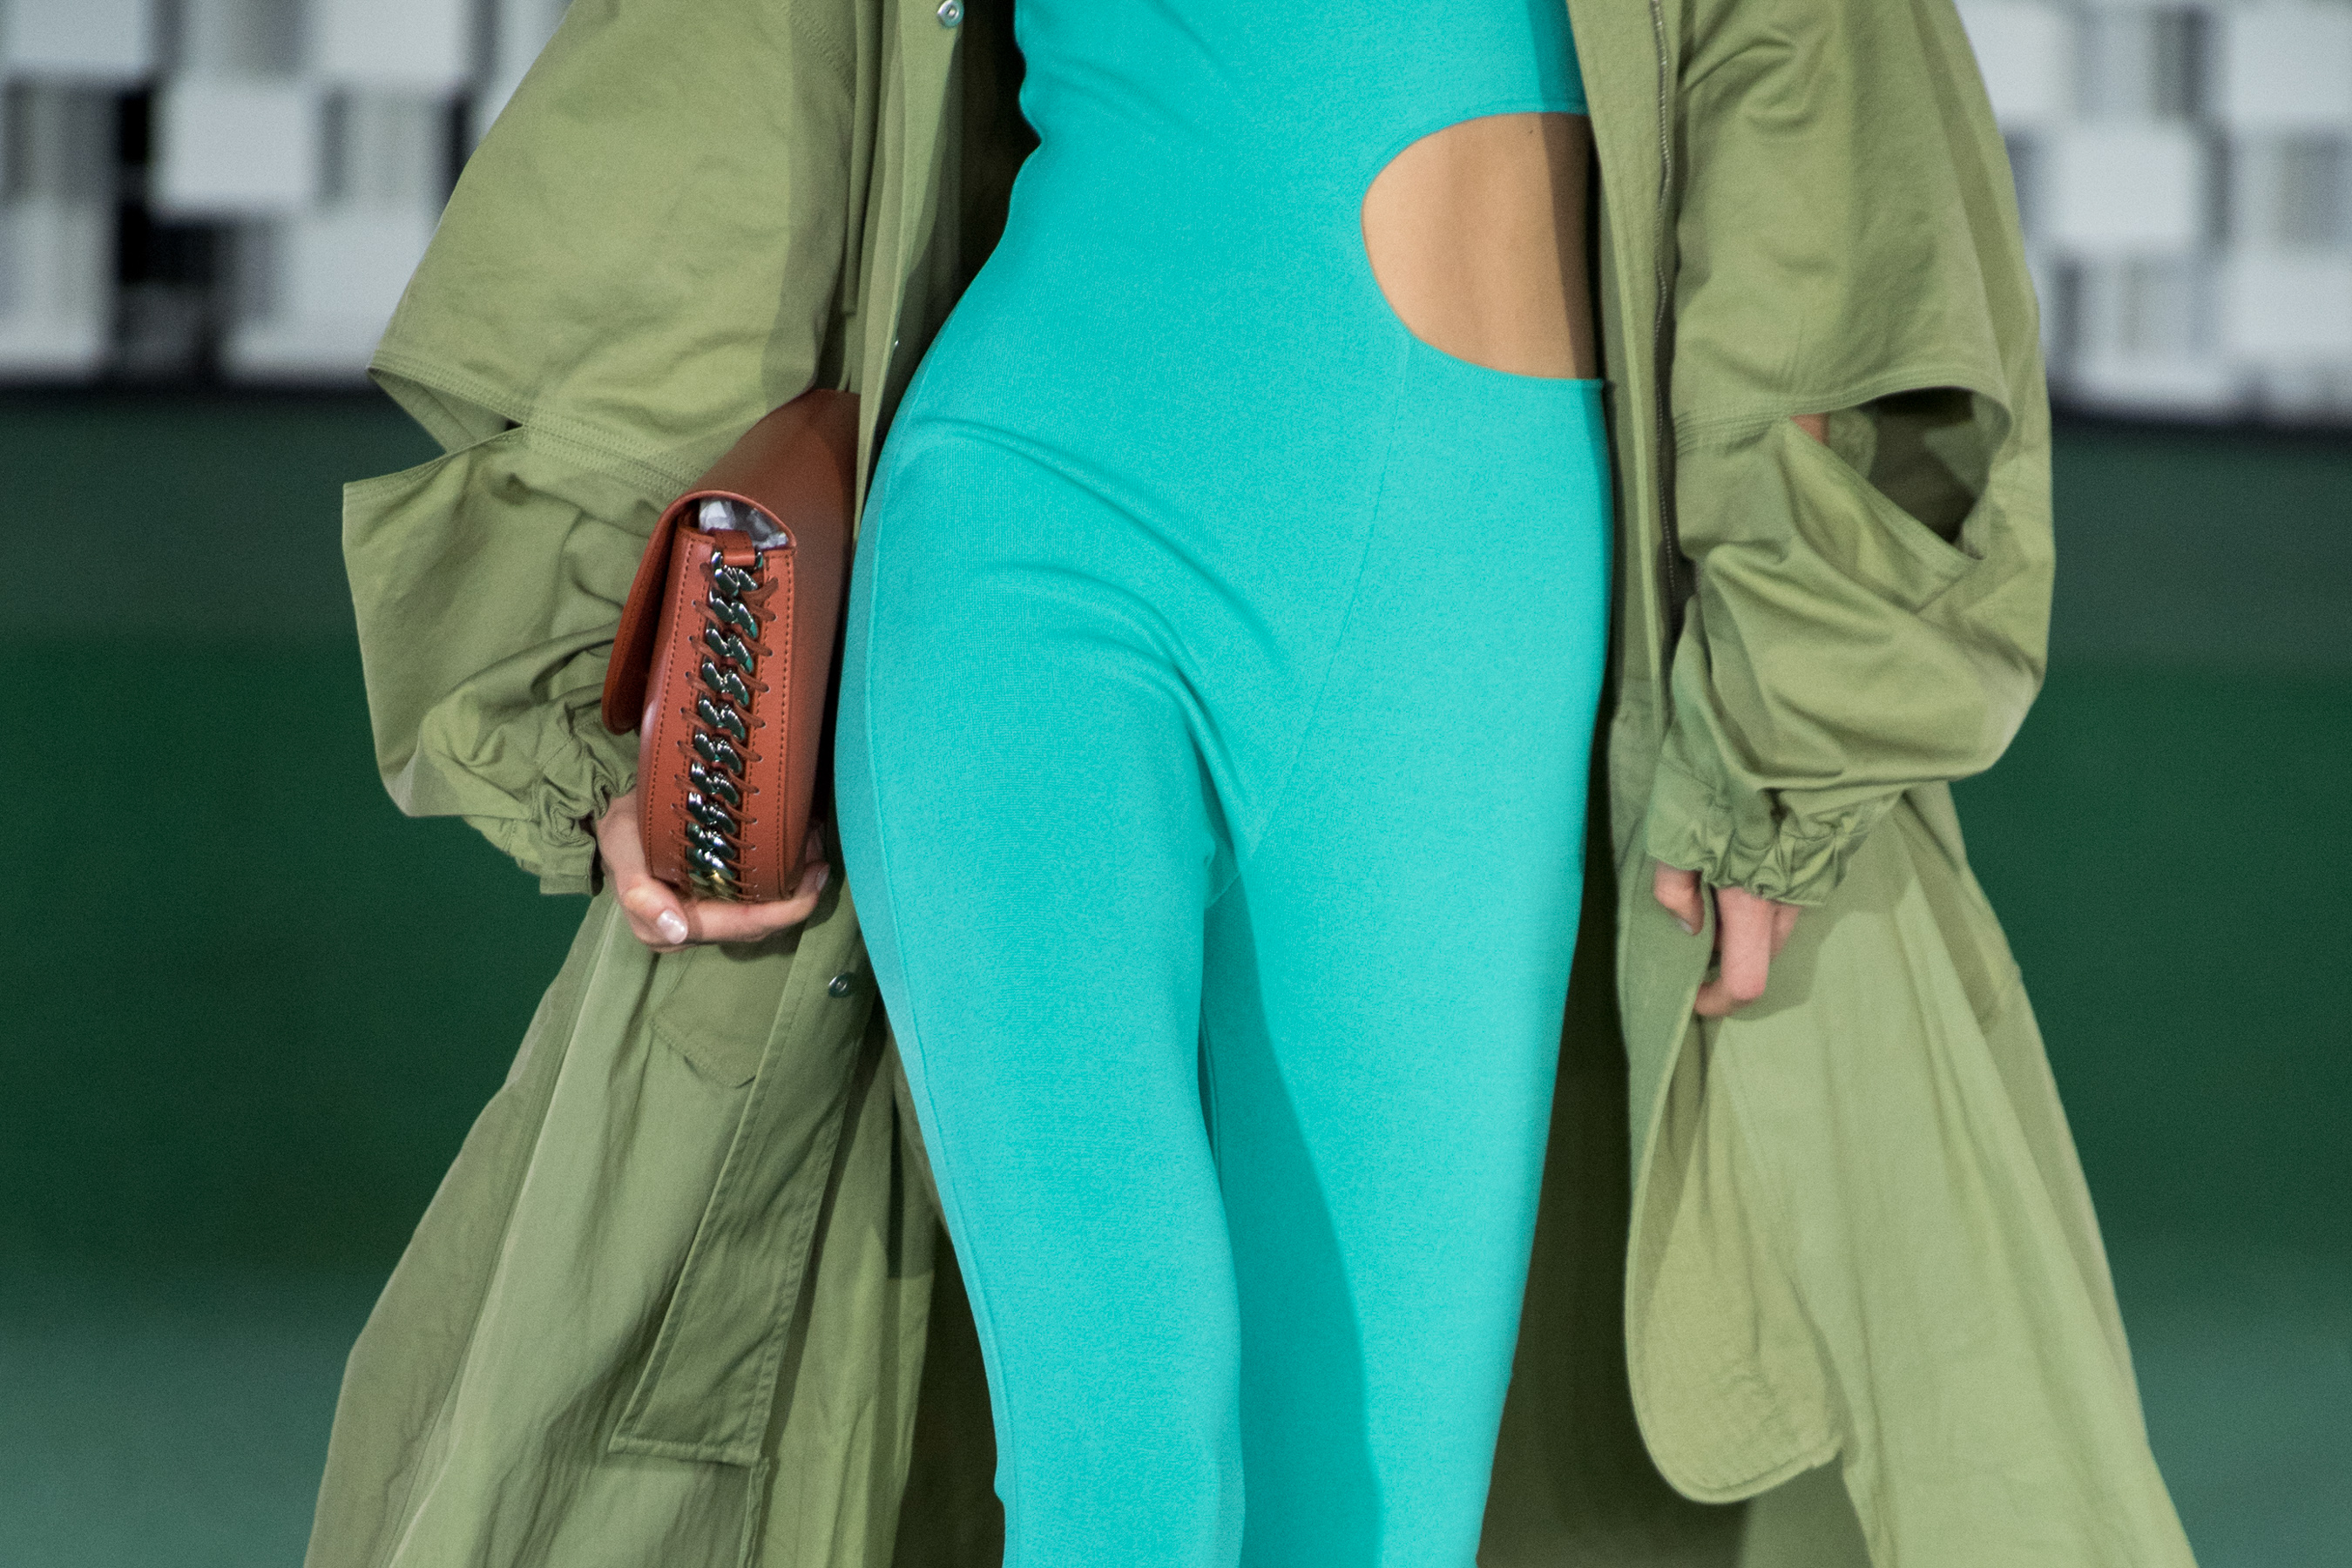 Stella Mccartney Spring 2022 Details Fashion Show